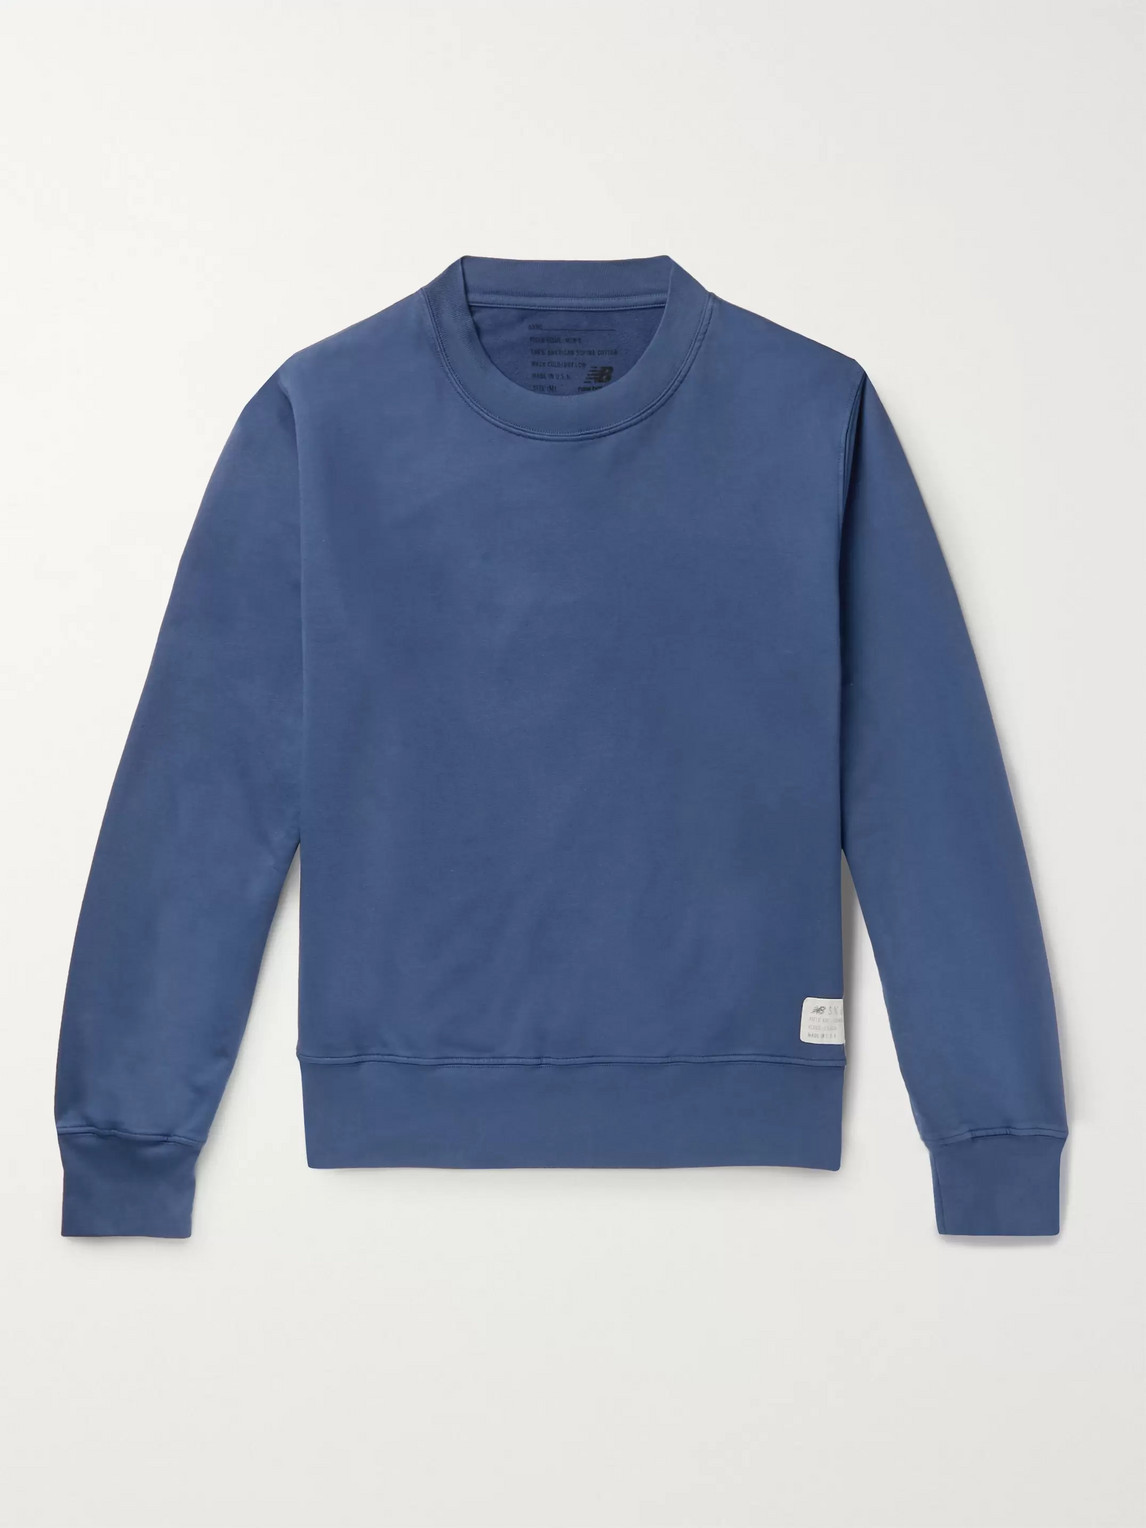 Save Khaki United New Balance Fleece-back Supima Cotton-jersey Sweatshirt In Blue